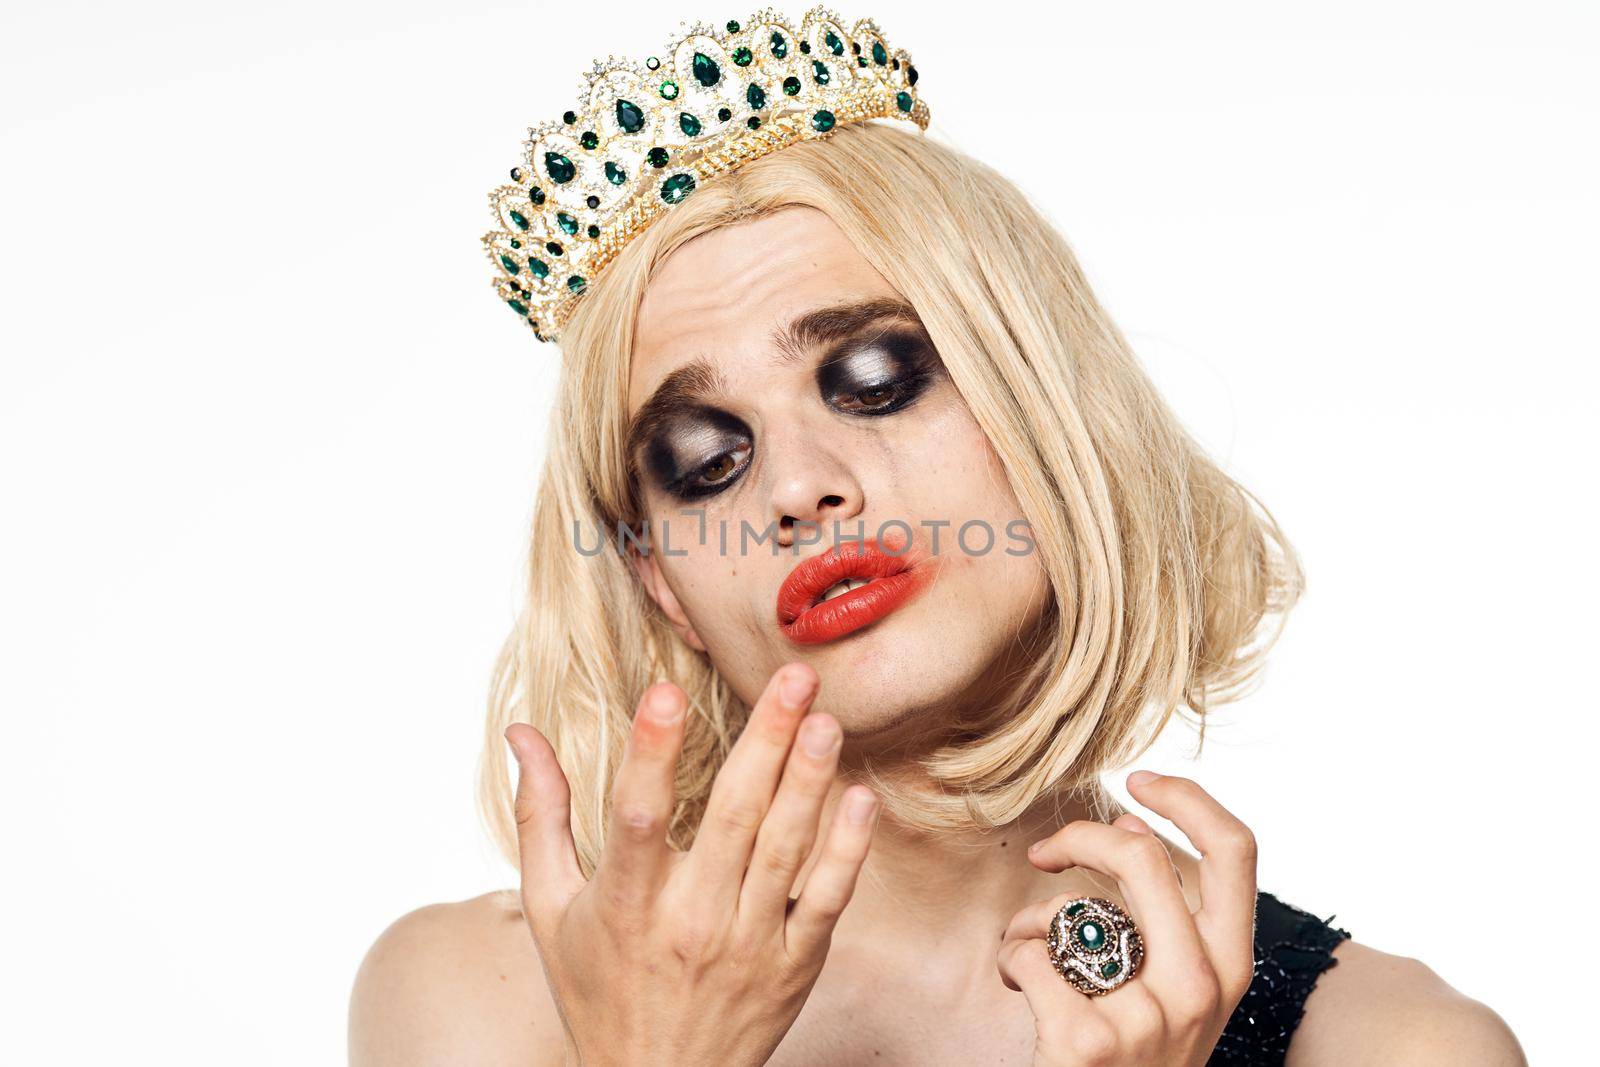 man in women's dress wig makeup posing bisexual. High quality photo